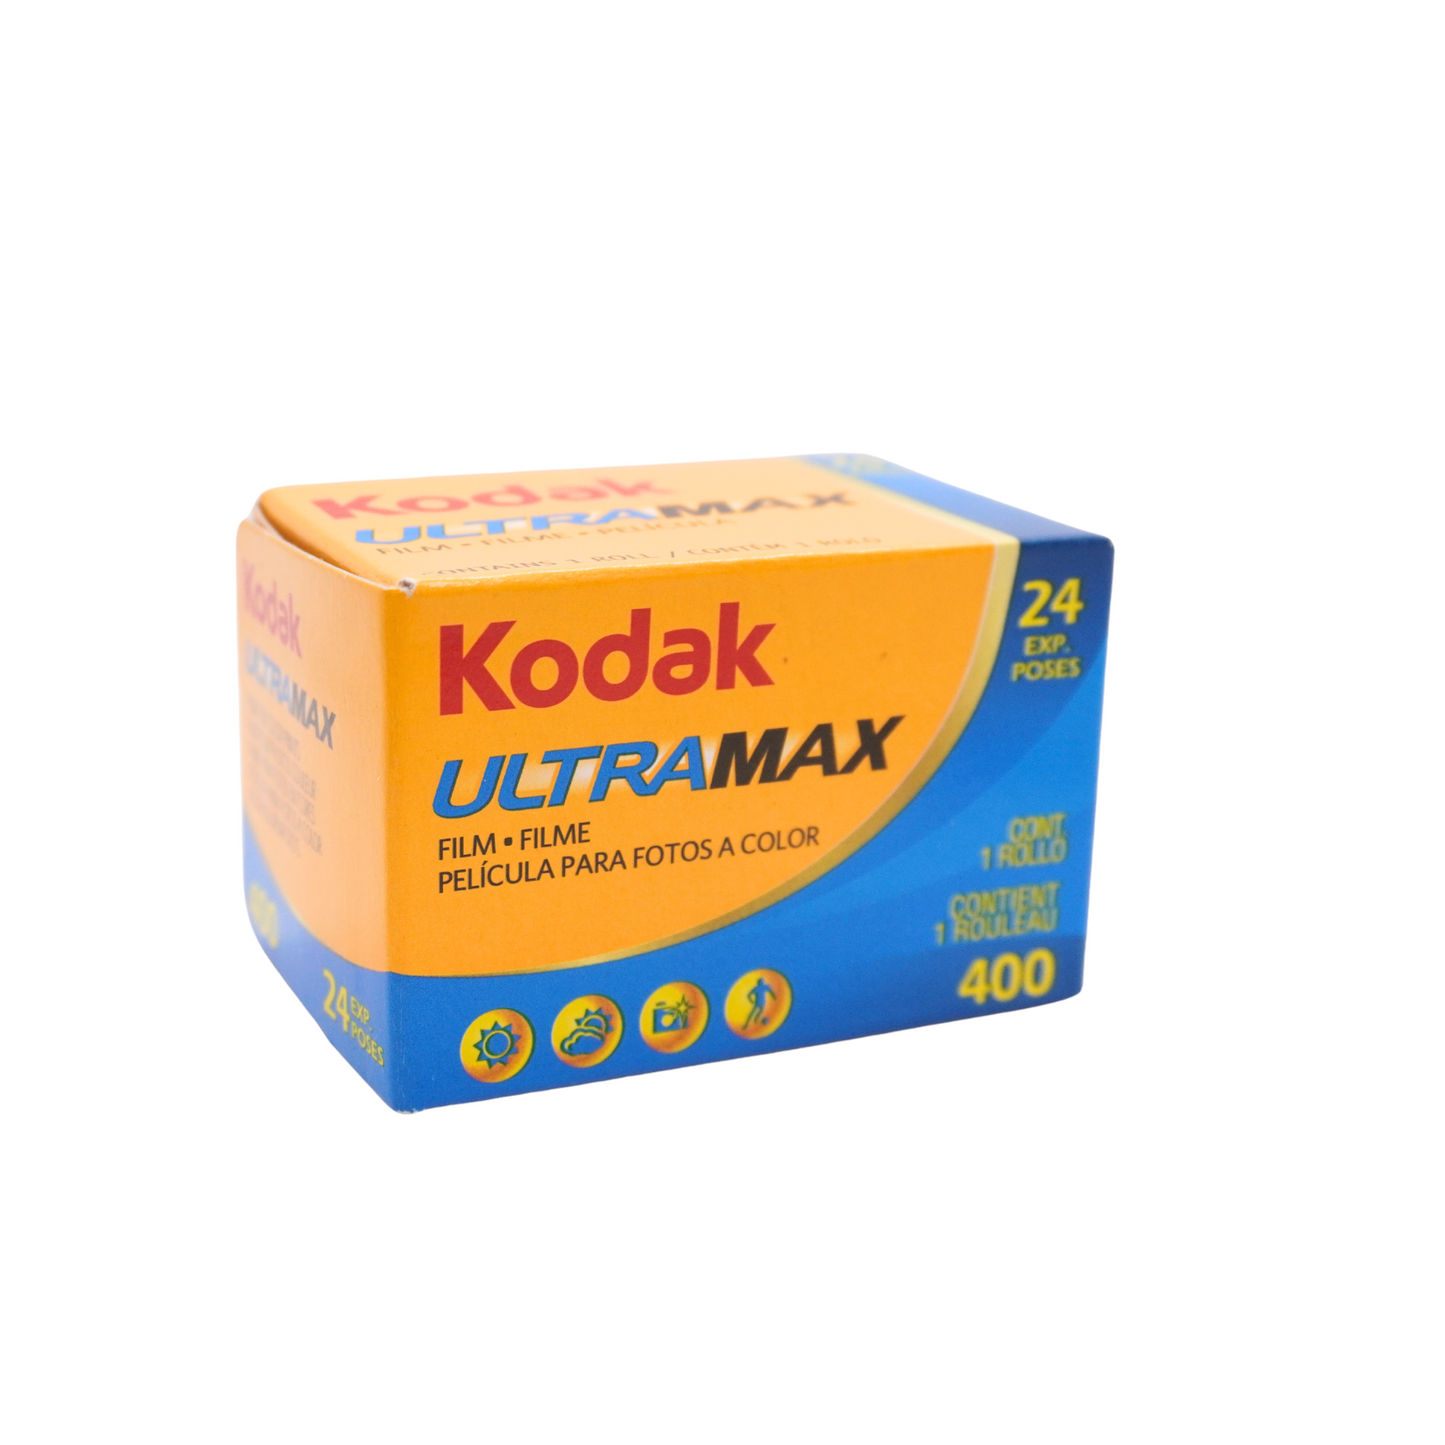 Kodak Ultramax 400 24exp 35mm Color Expired Film (2015/01)